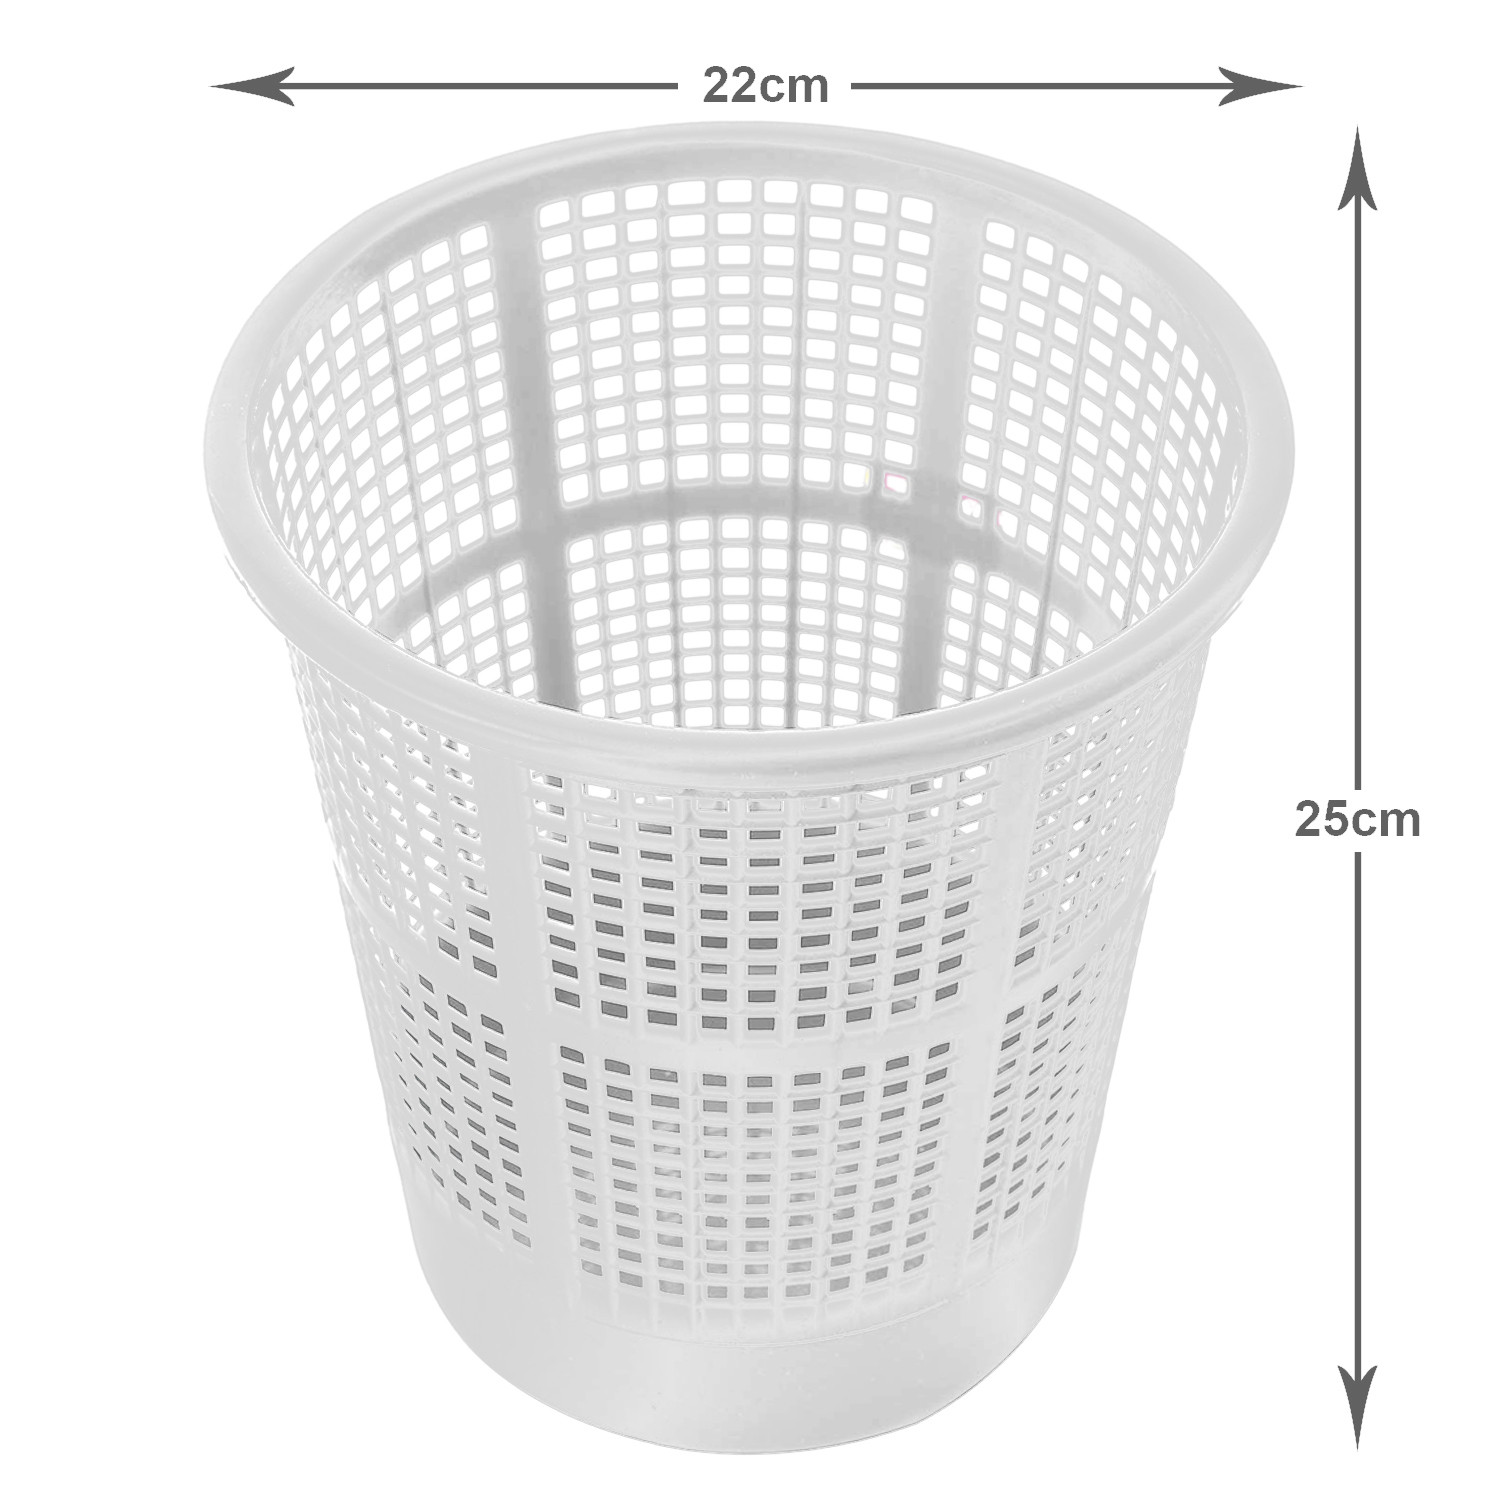 Kuber Industries Mesh Design Plastic Dustbin, Garbage Bin For Home, Kitchen, Office, 5Ltr.- Pack of 4 (Black & White)-47KM0791